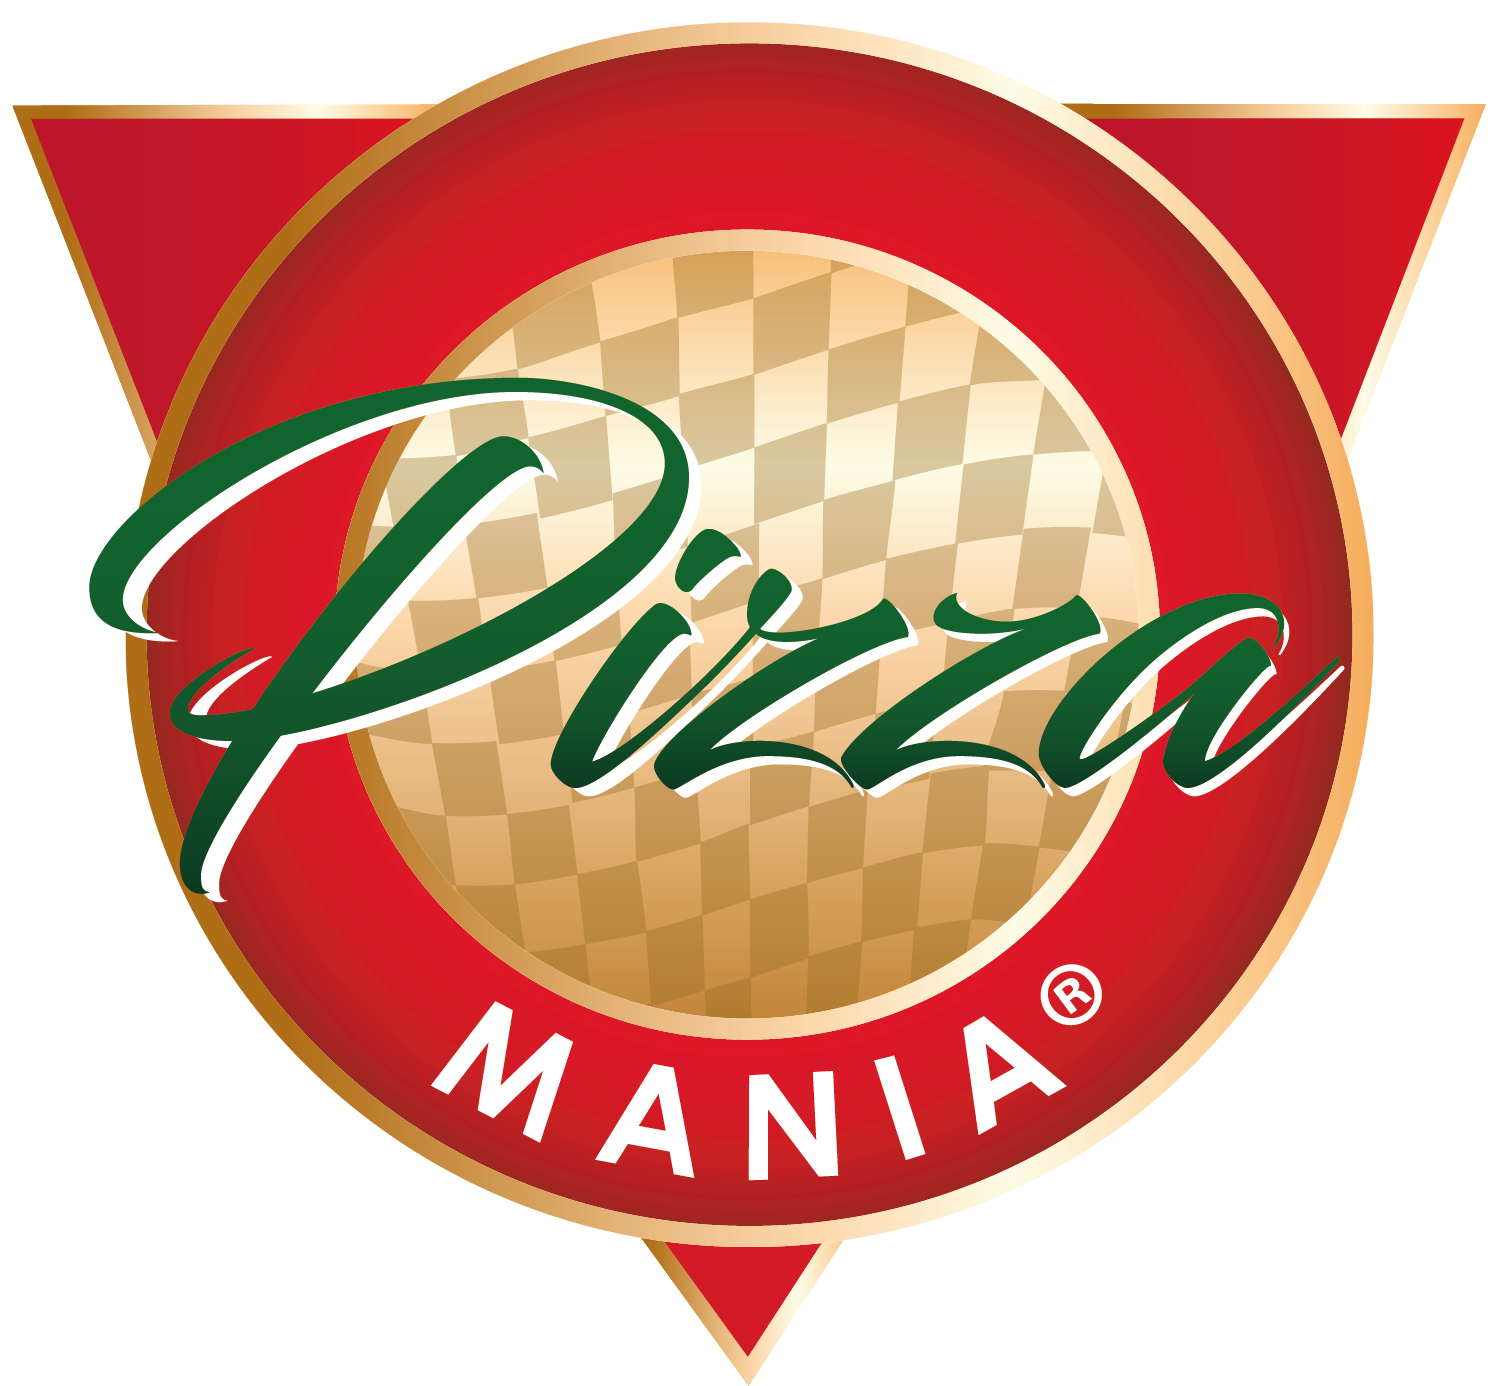 Création site internet pizza mania